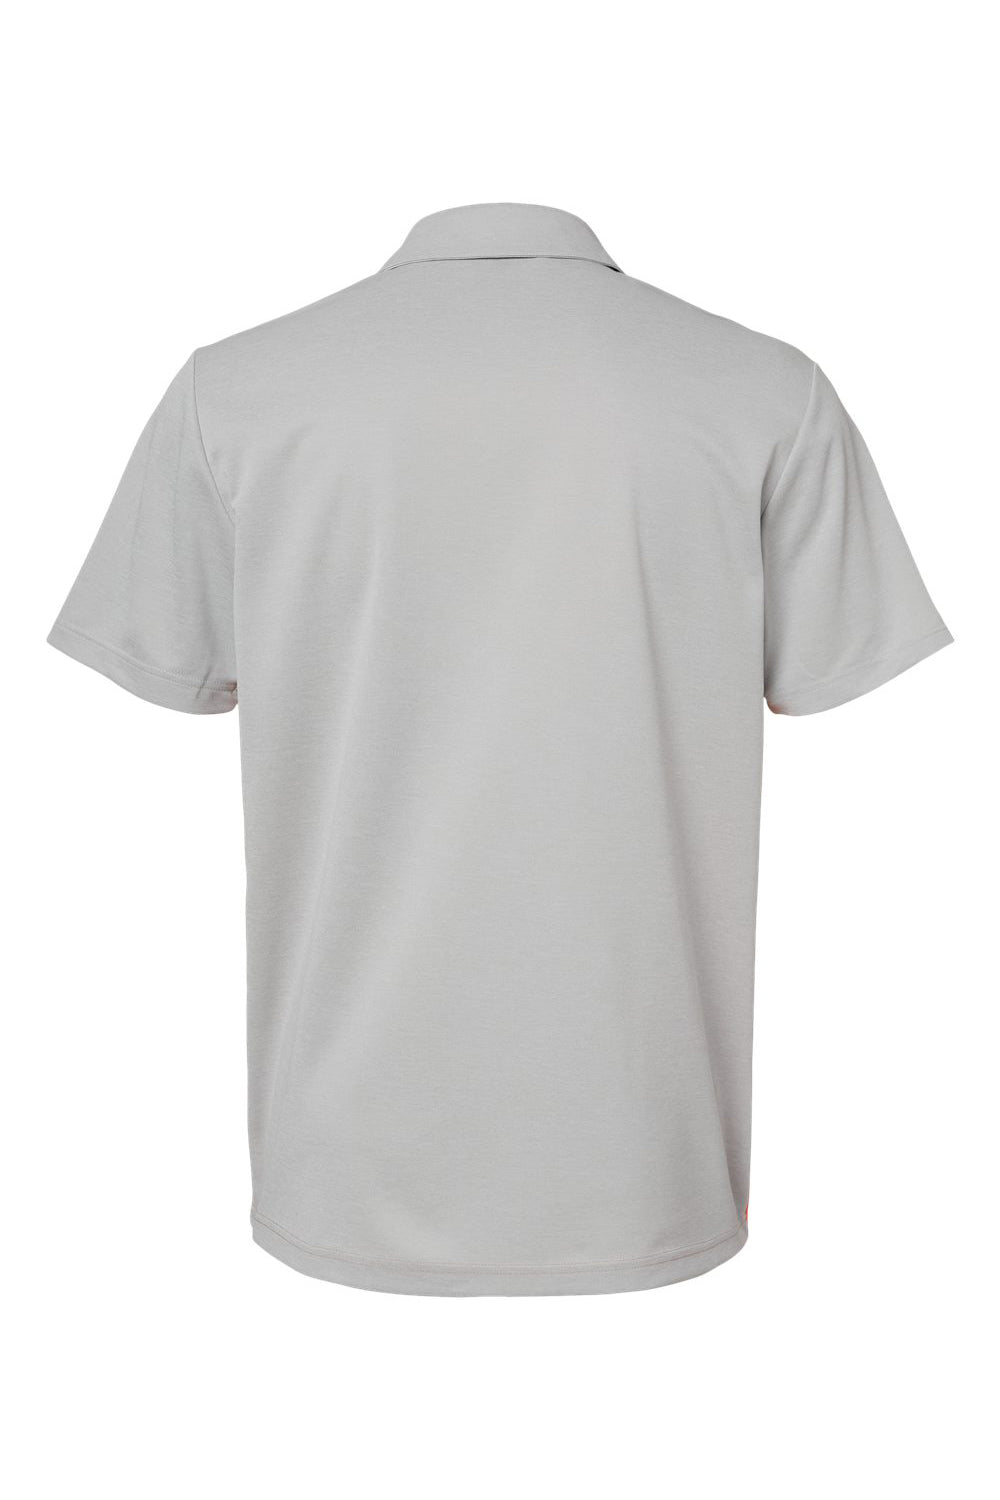 Adidas A508 Mens 3 Stripes Colorblock UPF 50+ Short Sleeve Polo Shirt Heather Grey/Heather Coral Flat Back